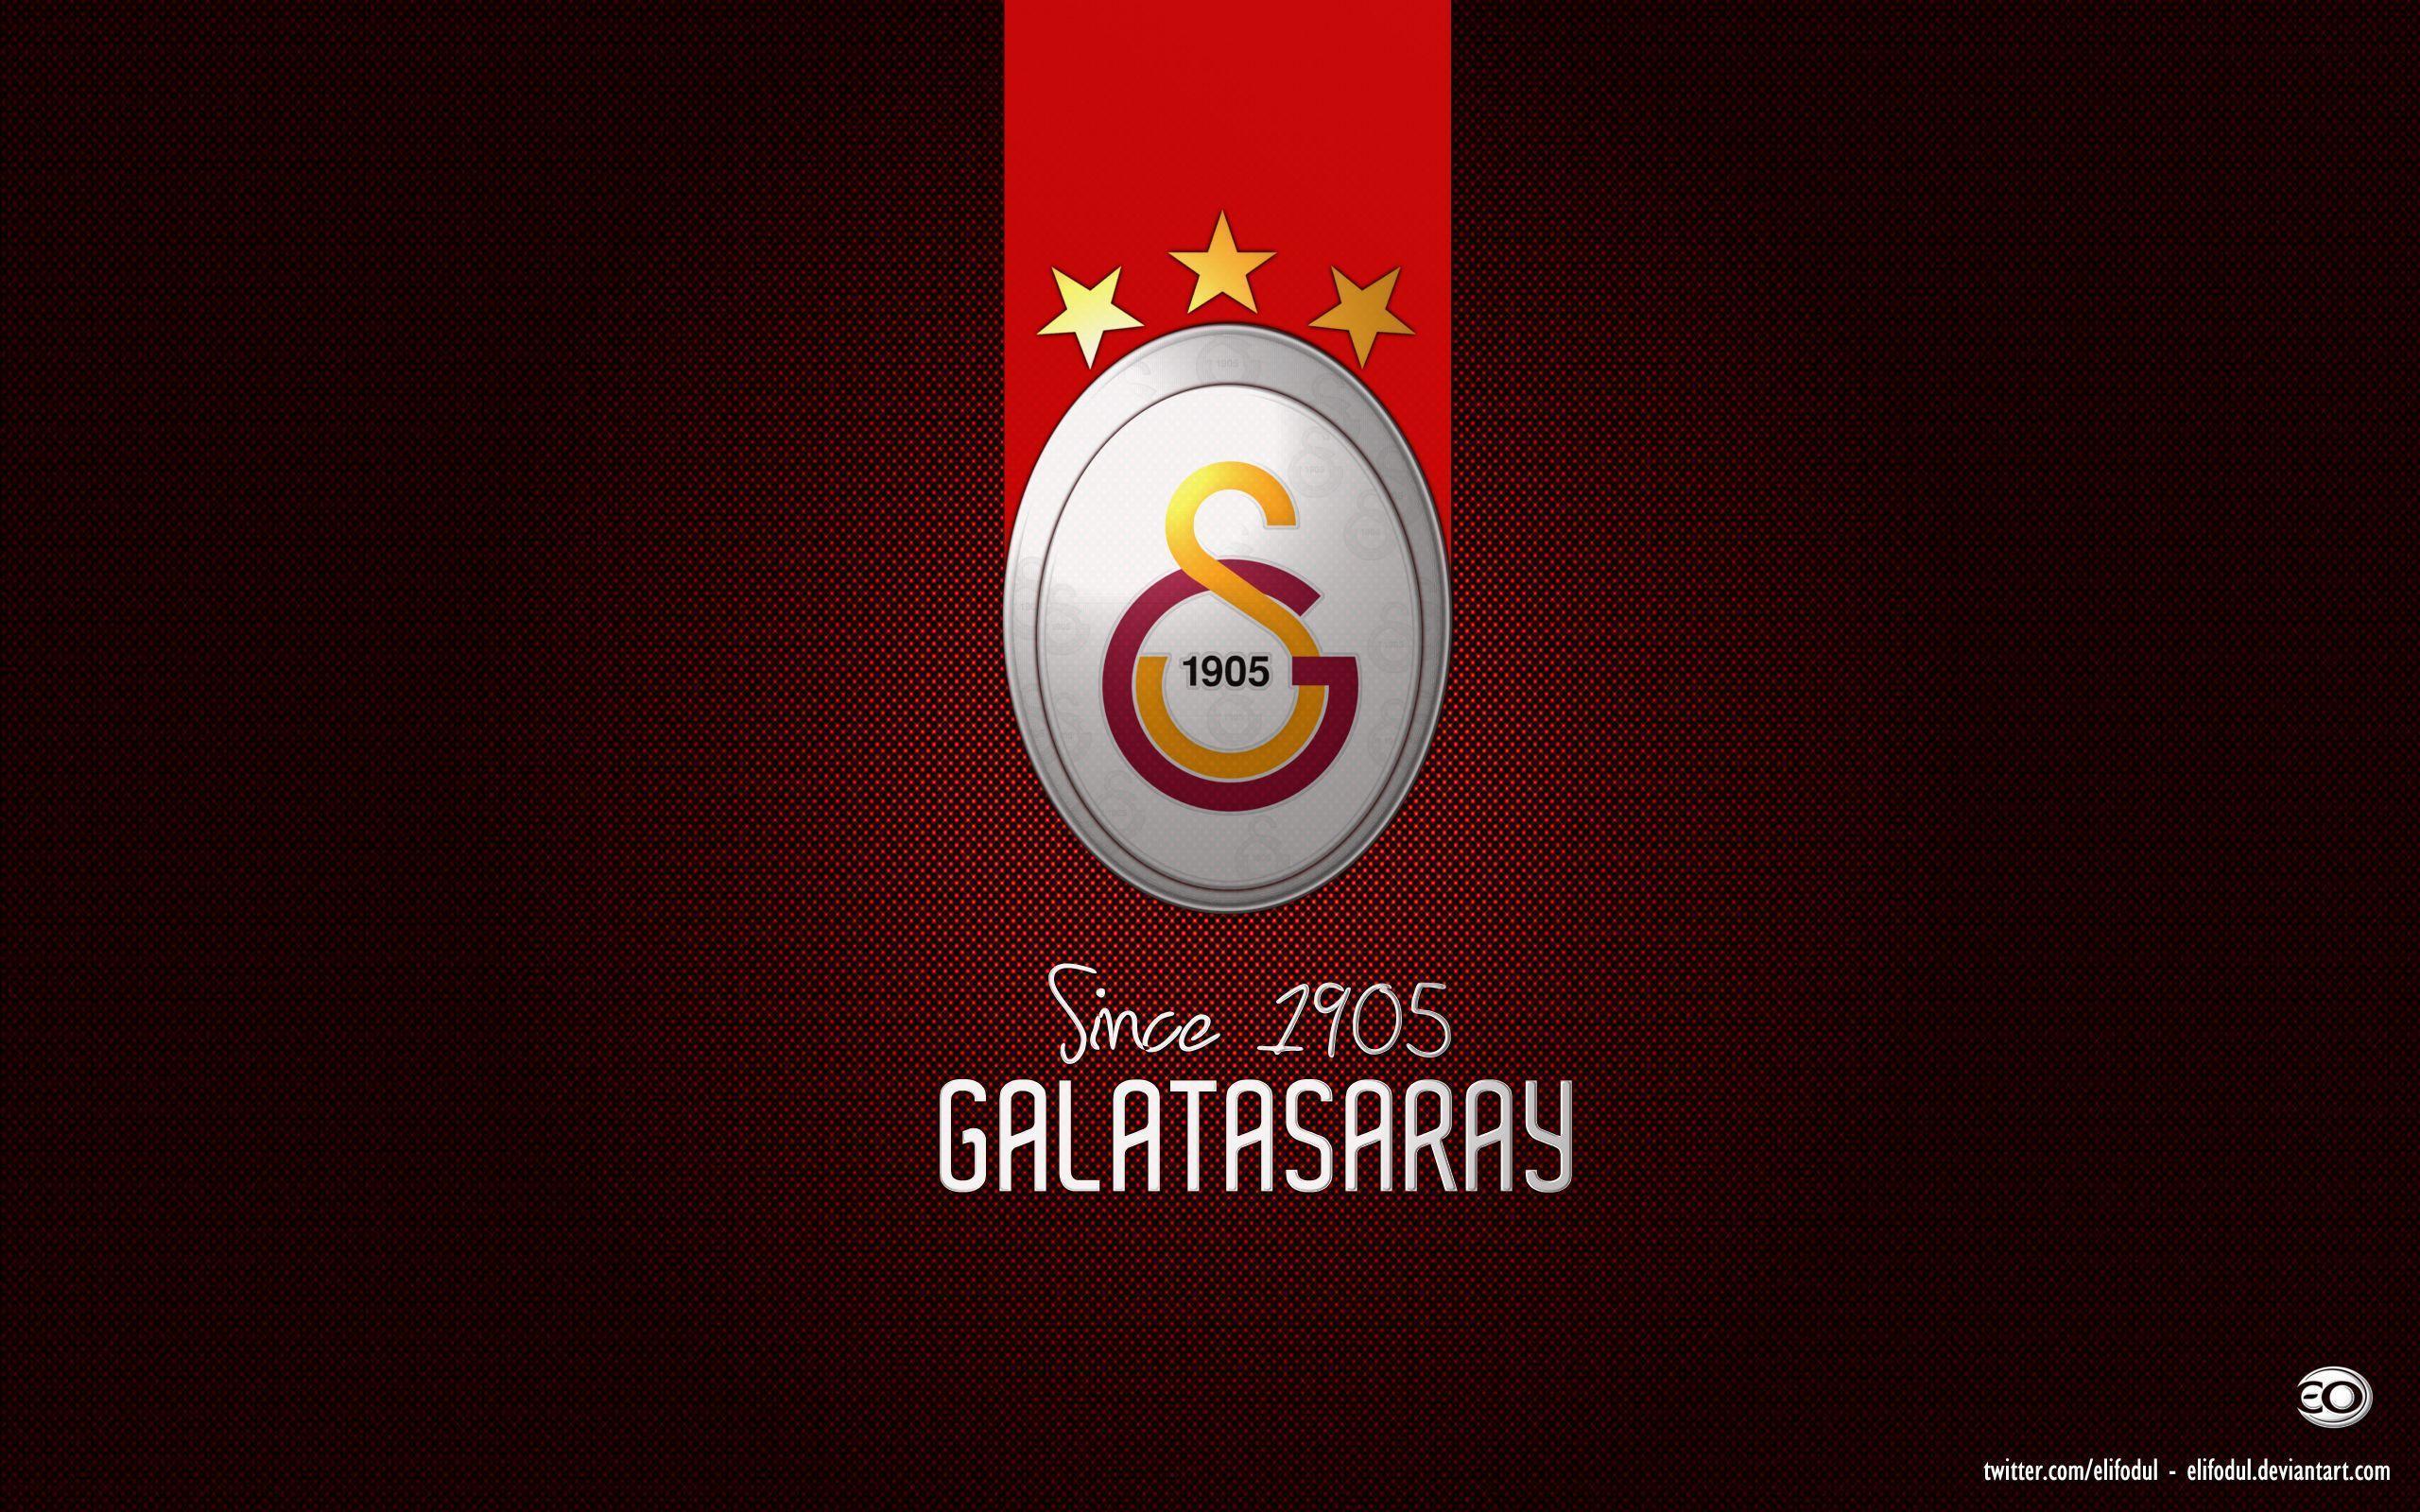 Fonds d&;écran Galatasaray, tous les wallpaper Galatasaray